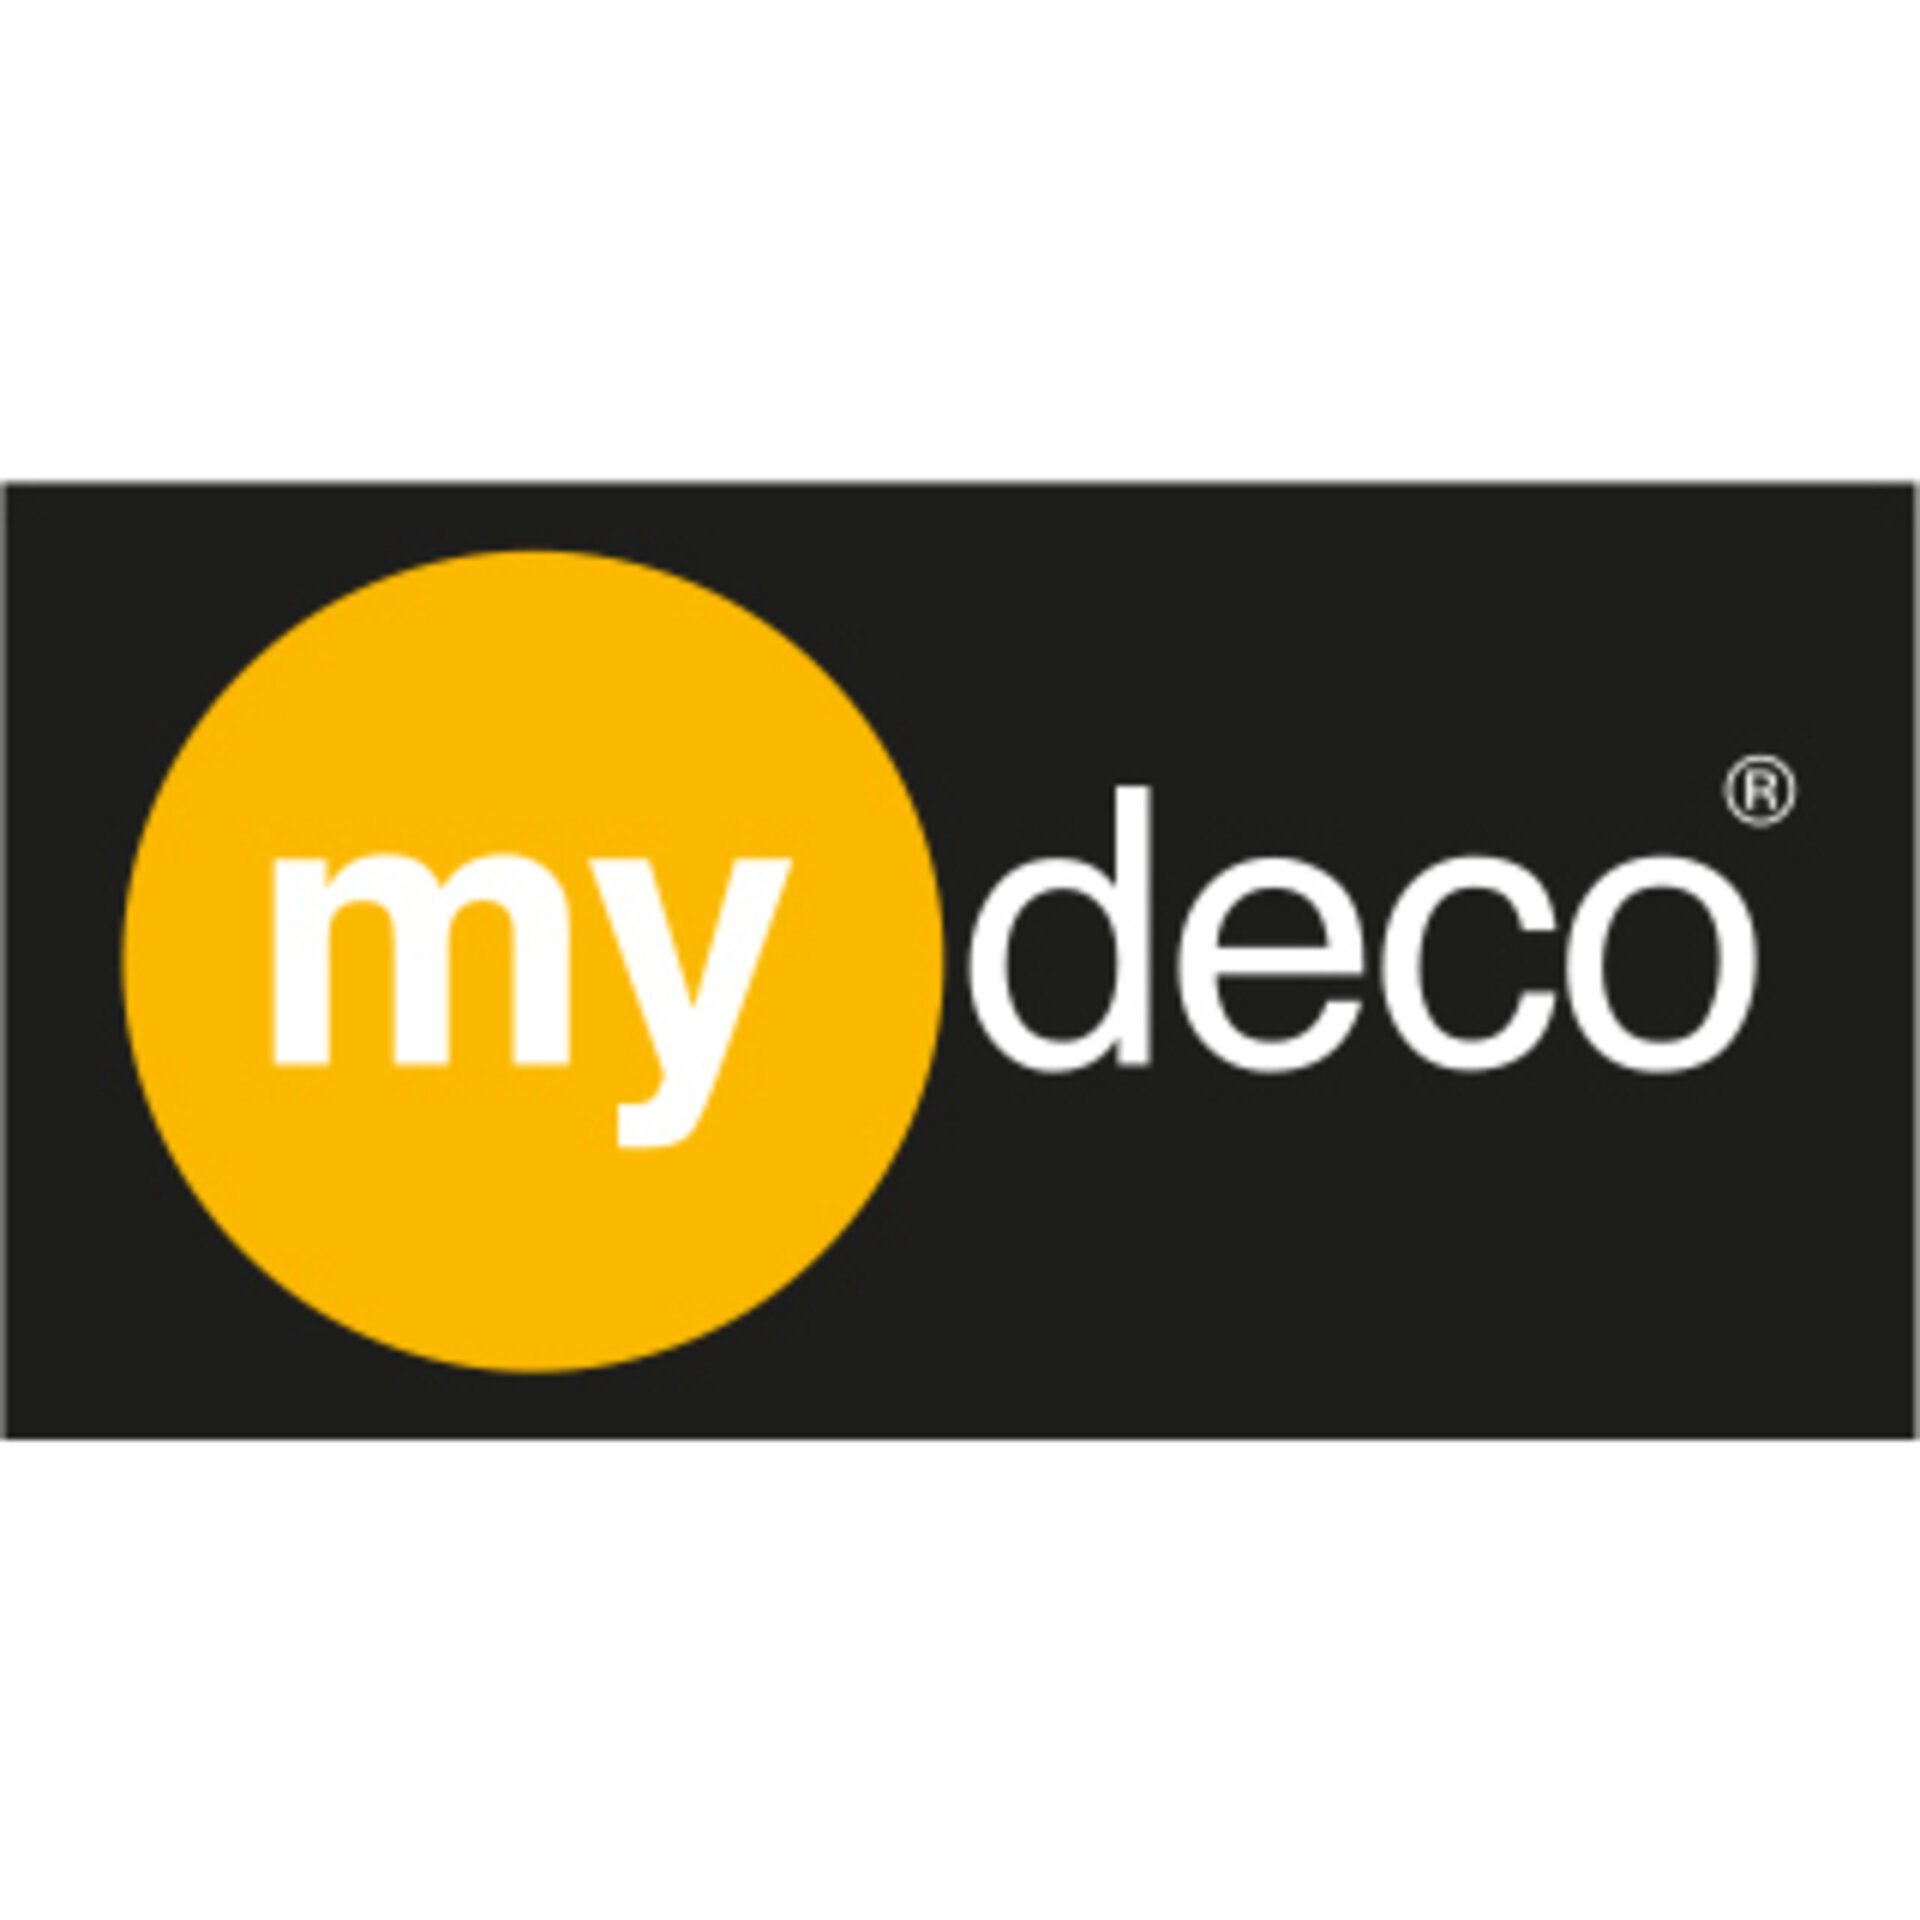 "my deco" Logo